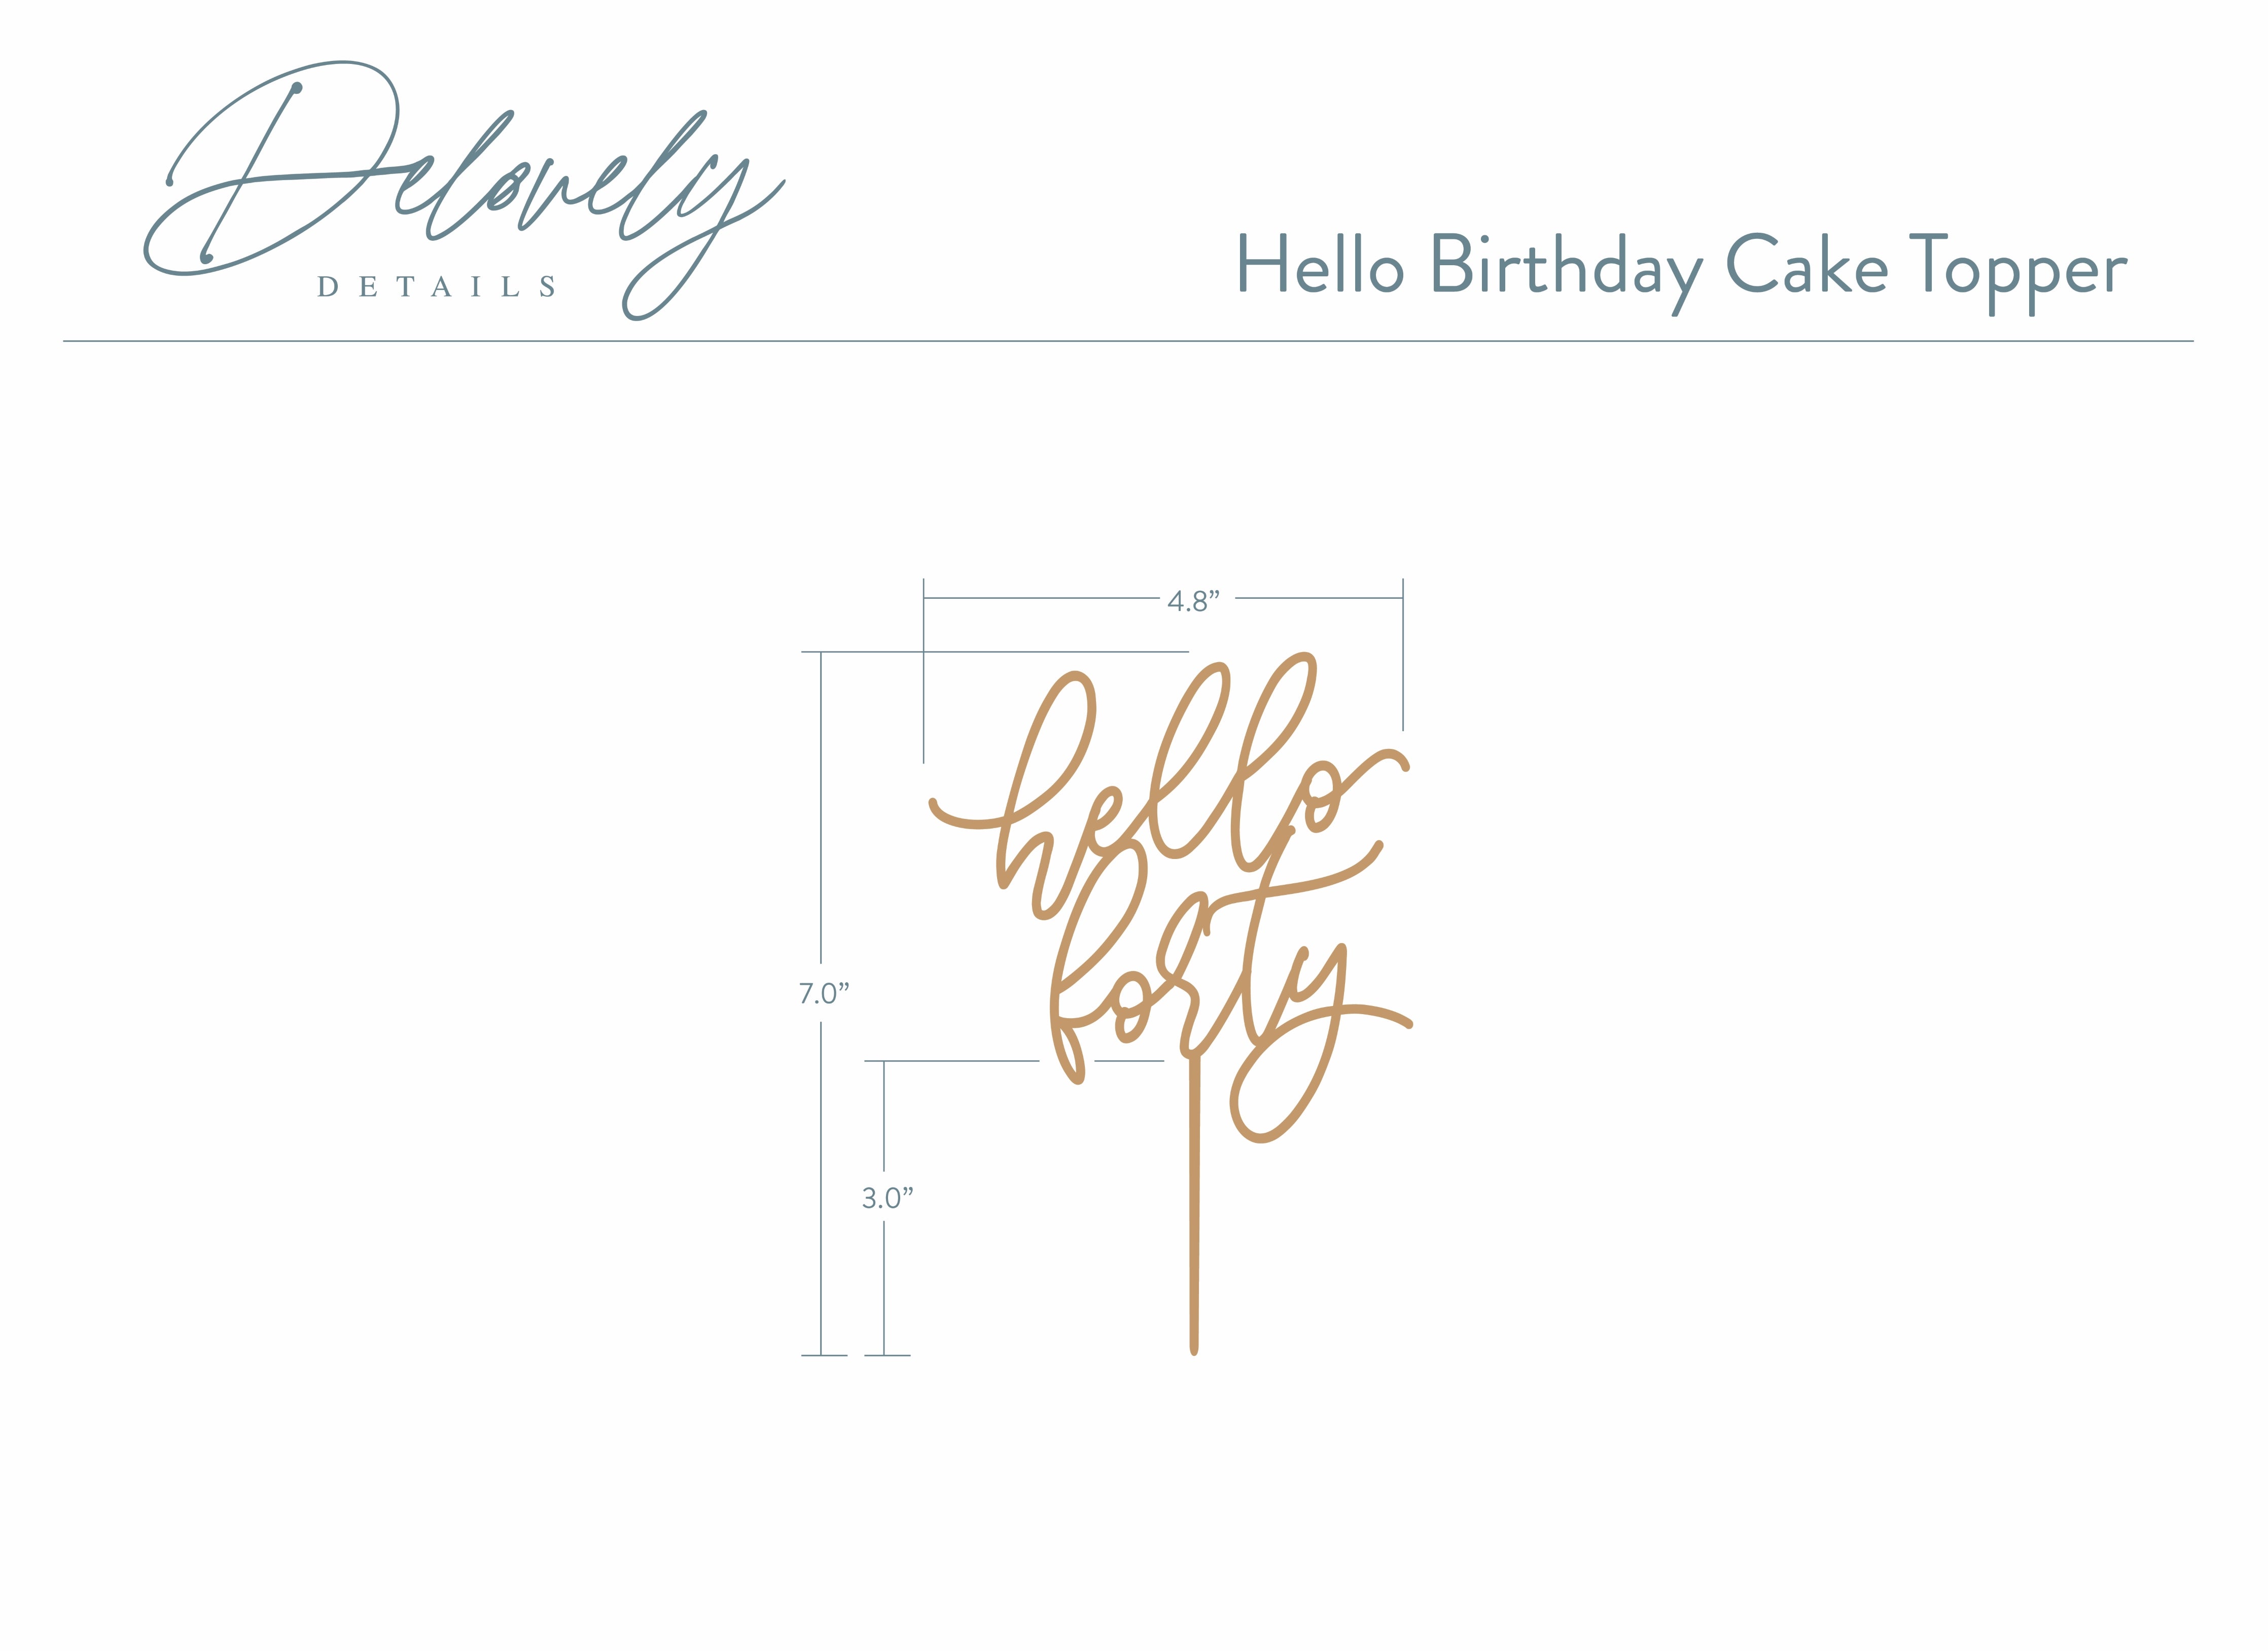 Hello Birthday Cake Topper